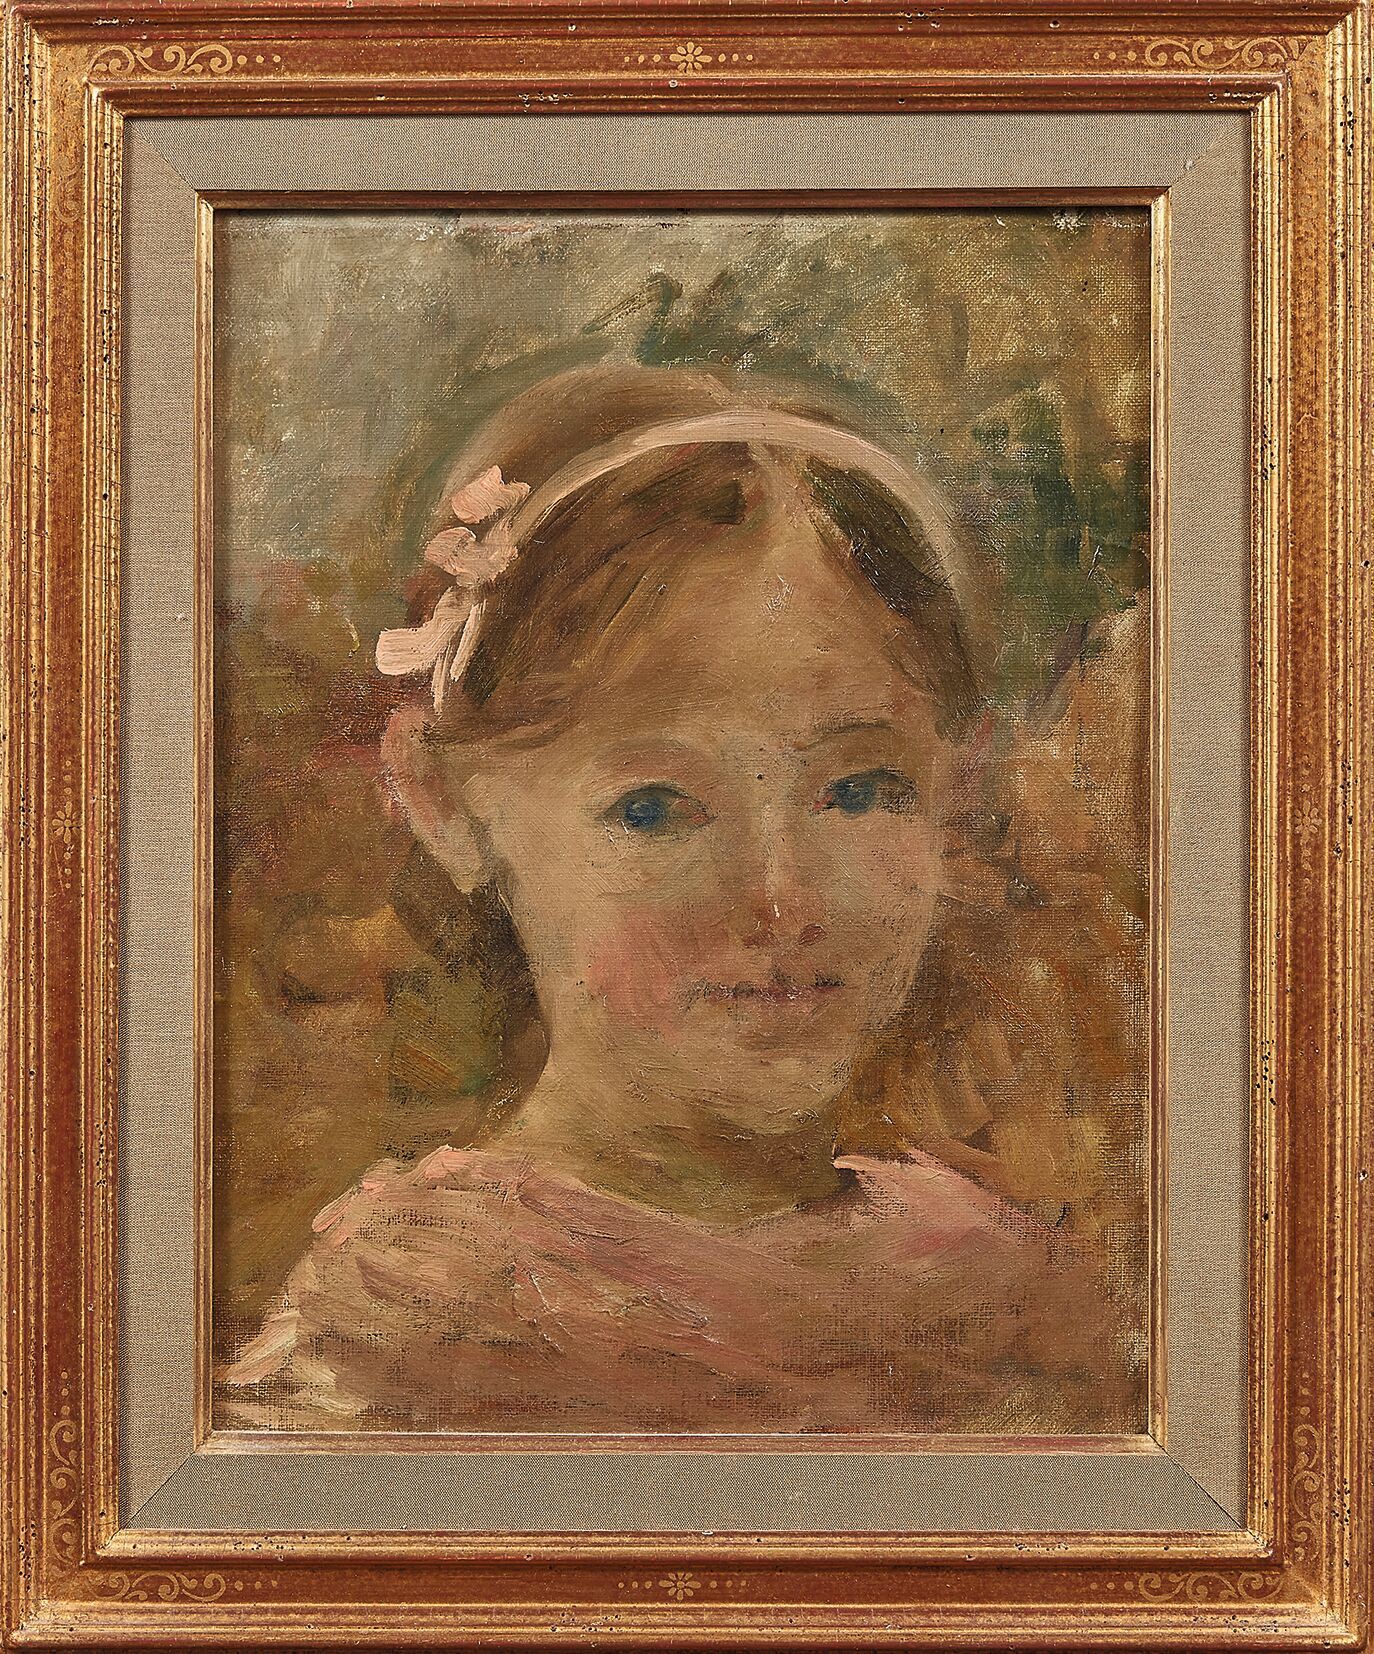 Null Alys PRAT (1886-1924)
La diadema rosa
Óleo sobre lienzo
34,5 x 26,5 cm